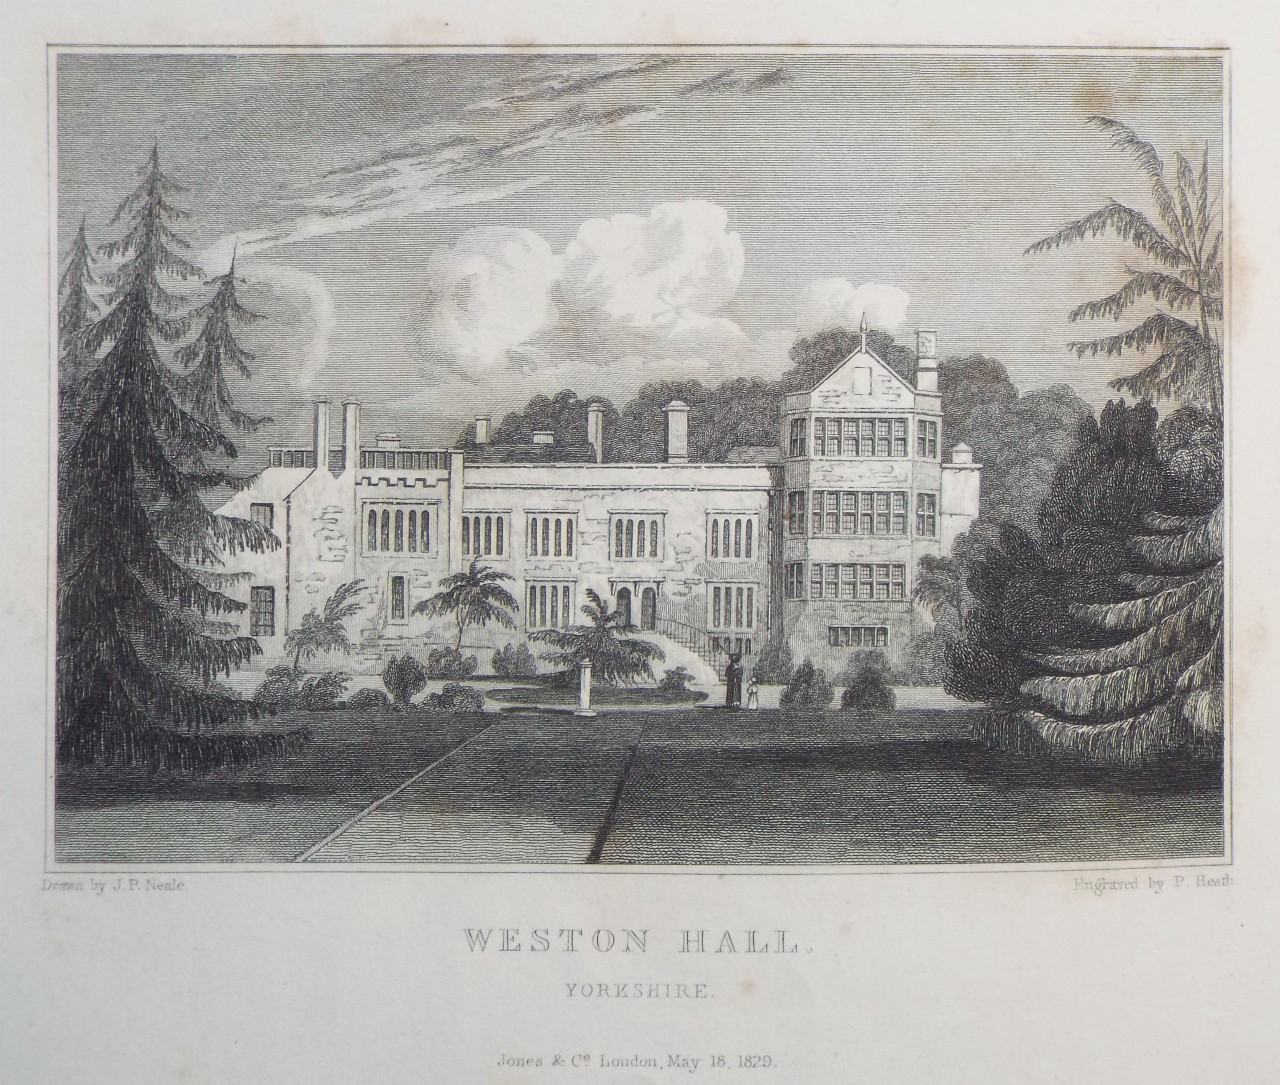 Print - Weston Hall, Yorkshire. - Heath